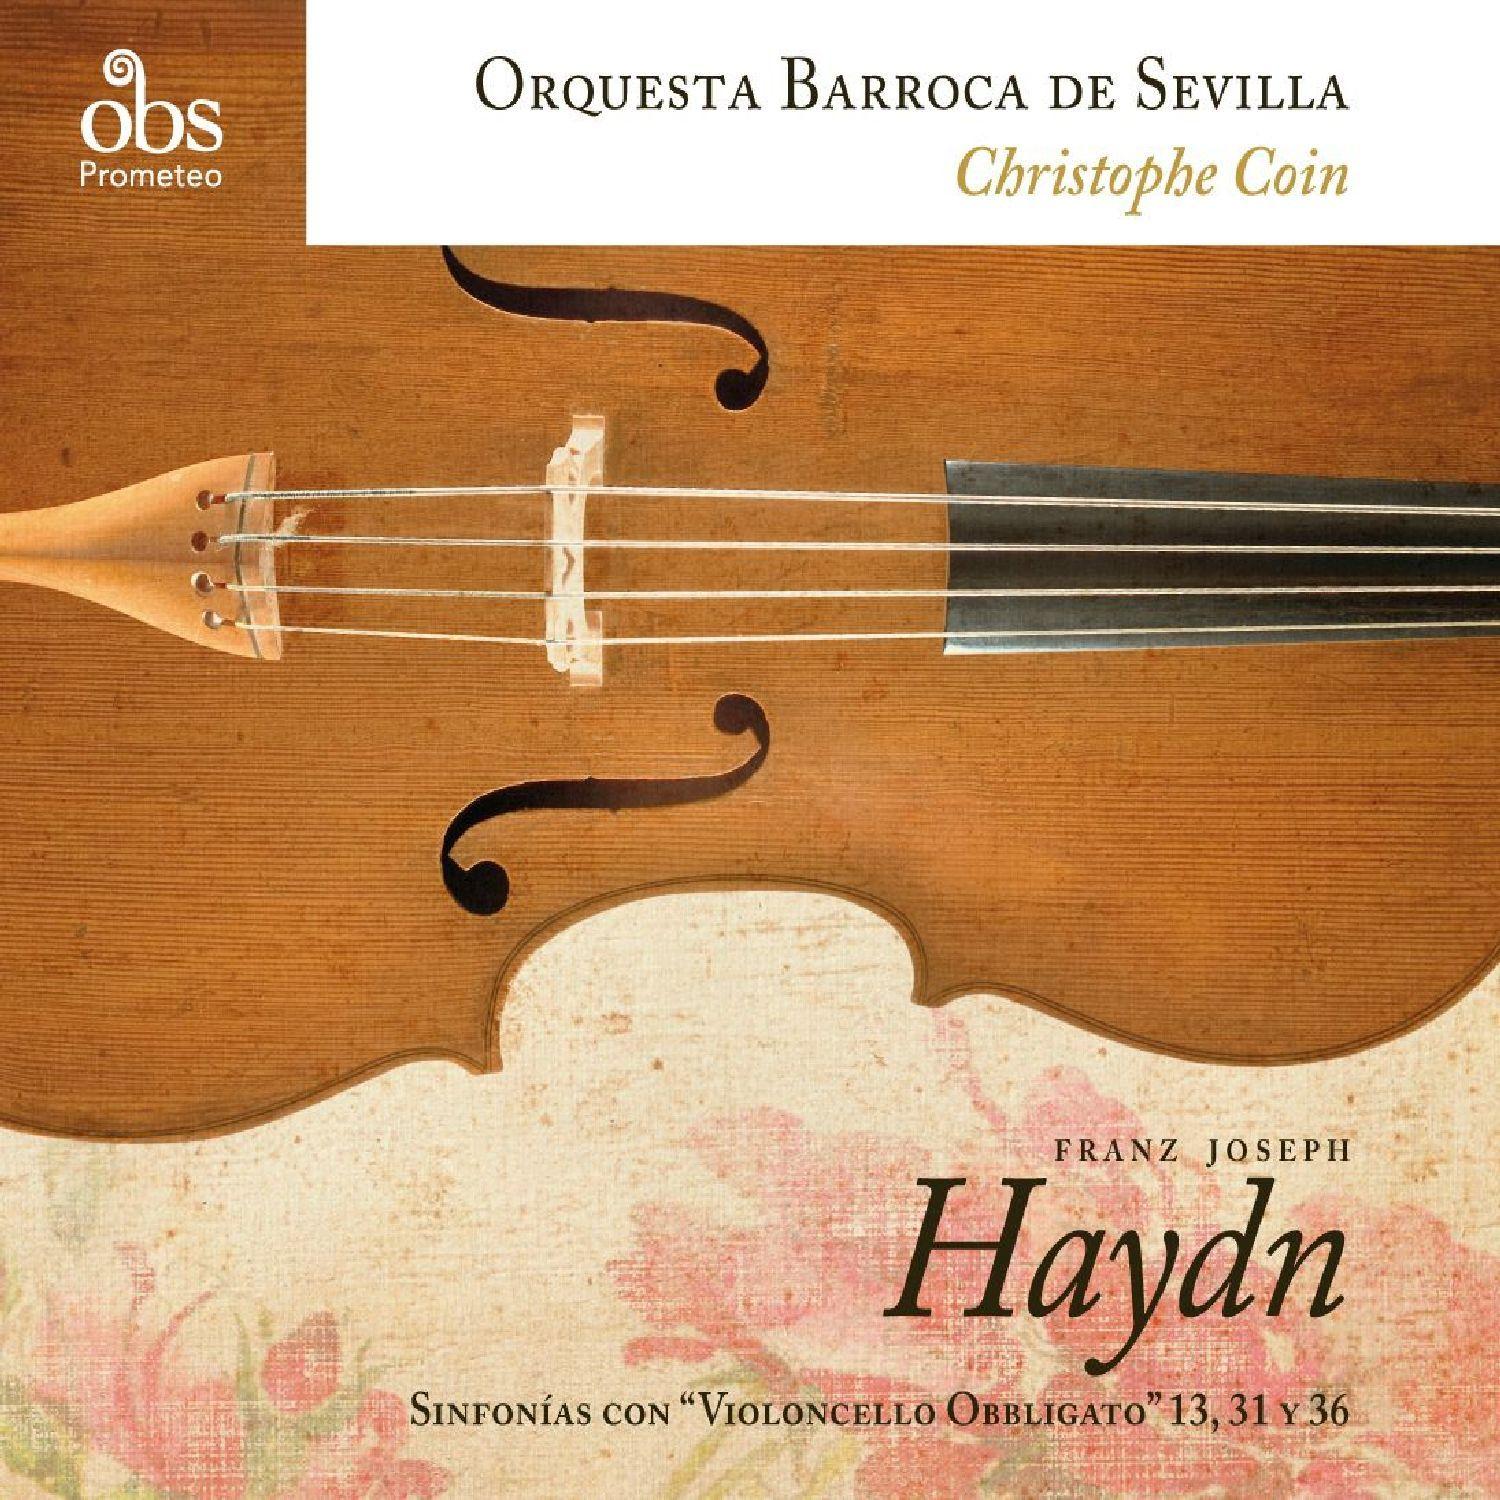 Franz Joseph Haydn: Sinfonías con Violoncello “Obligatto”